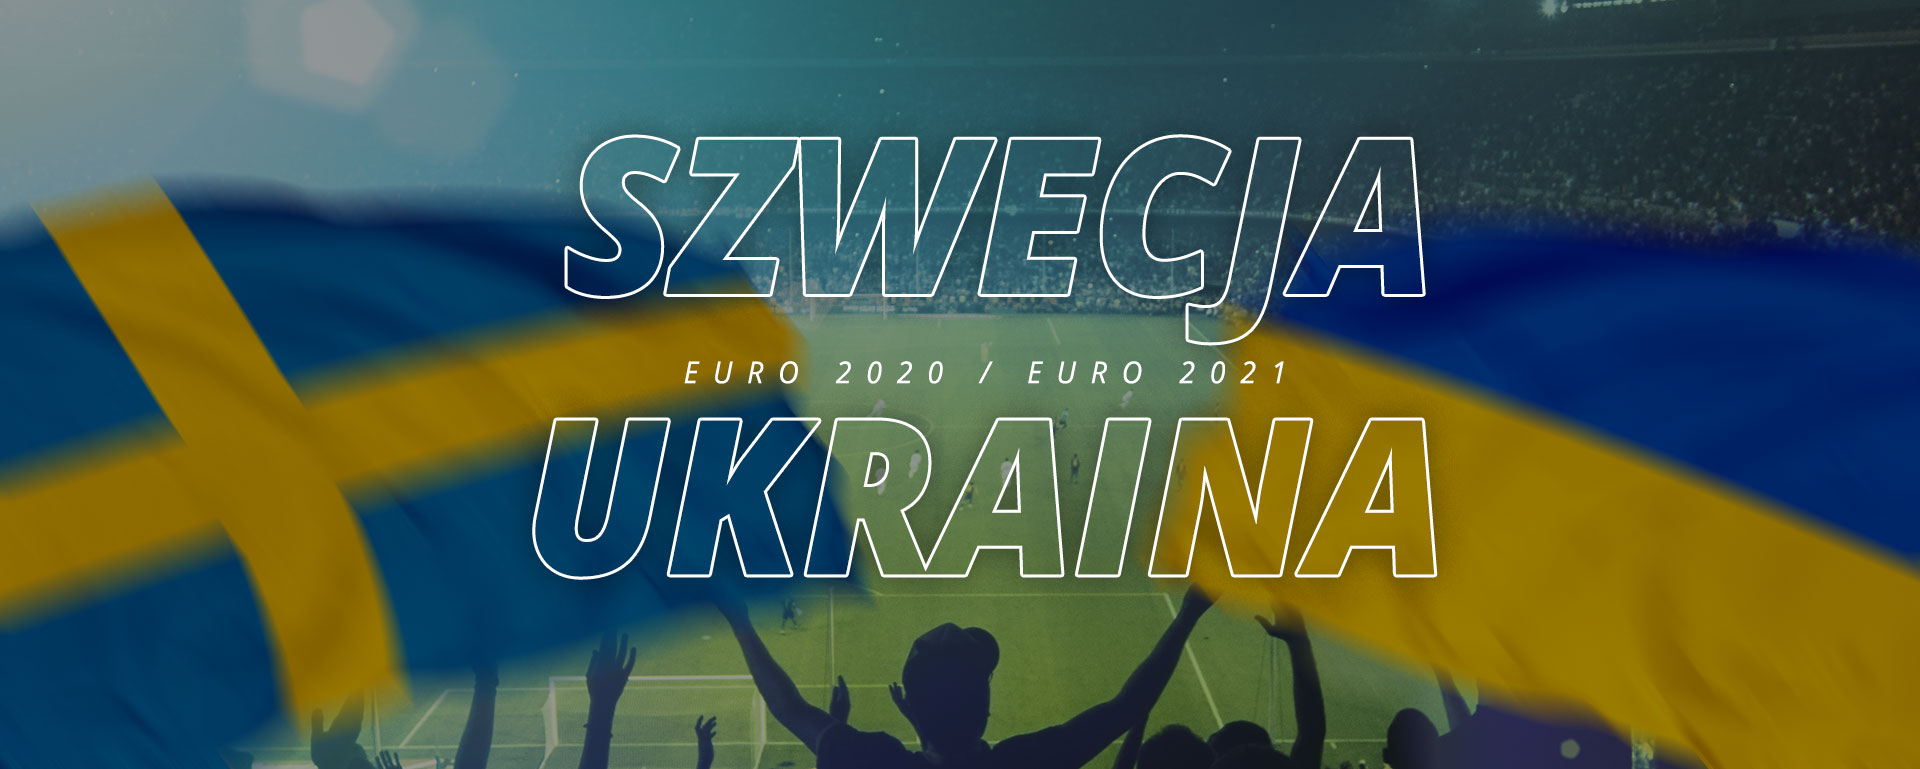 Szwecja – Ukraina | 1/8 finału Euro 2020 / Euro 2021